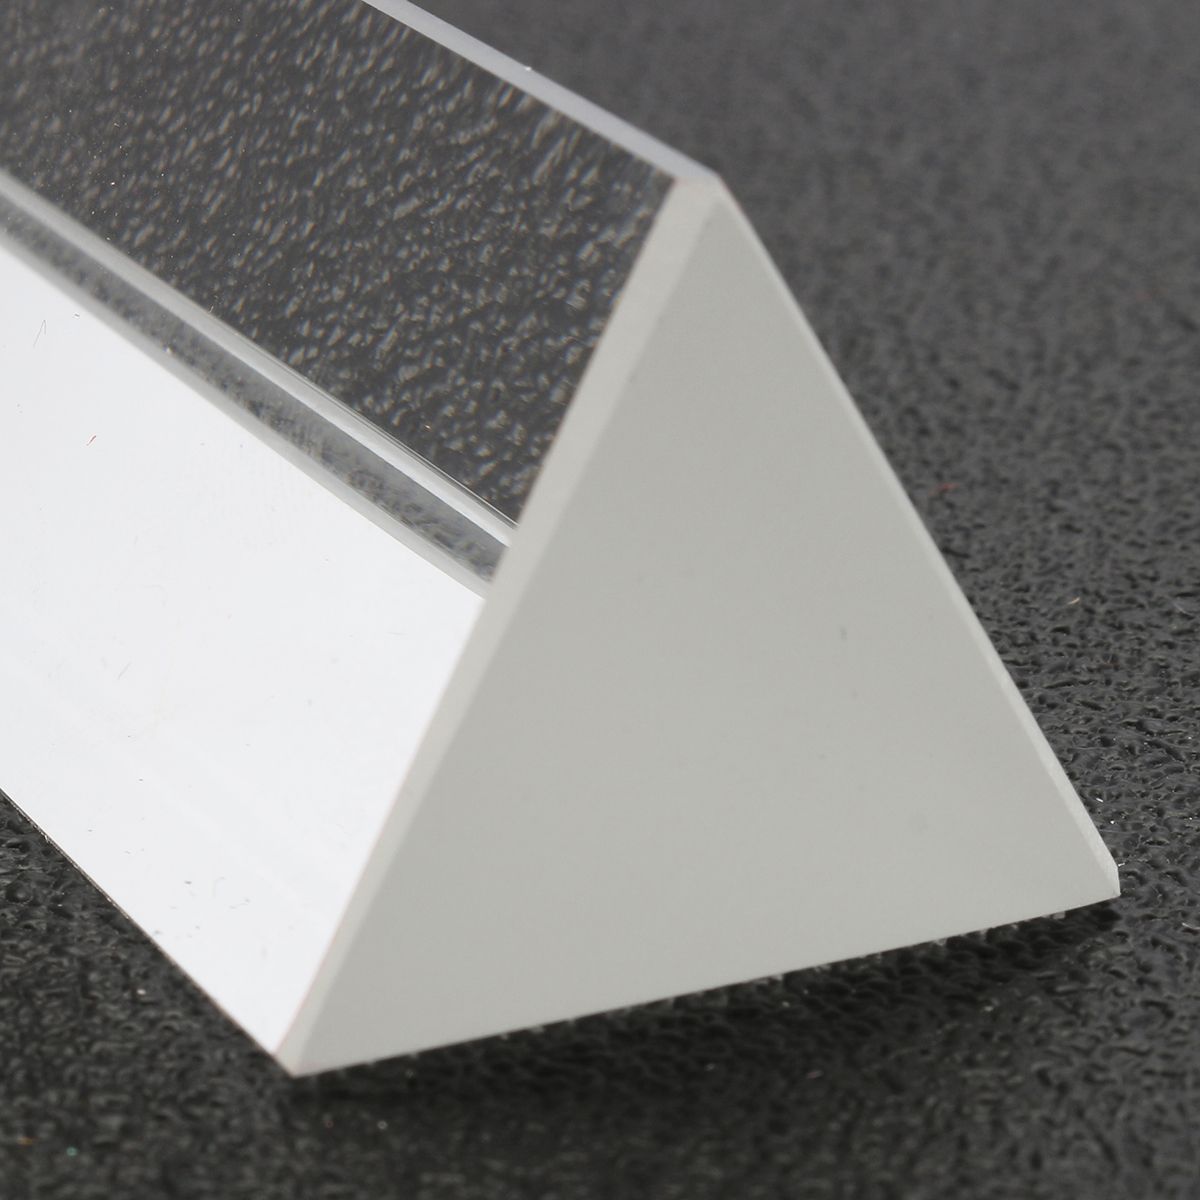 6-inch-Optical-Glass-Triple-Triangular-Prism-in-Box-Physics-Teaching-Light-Spectrum-1193355